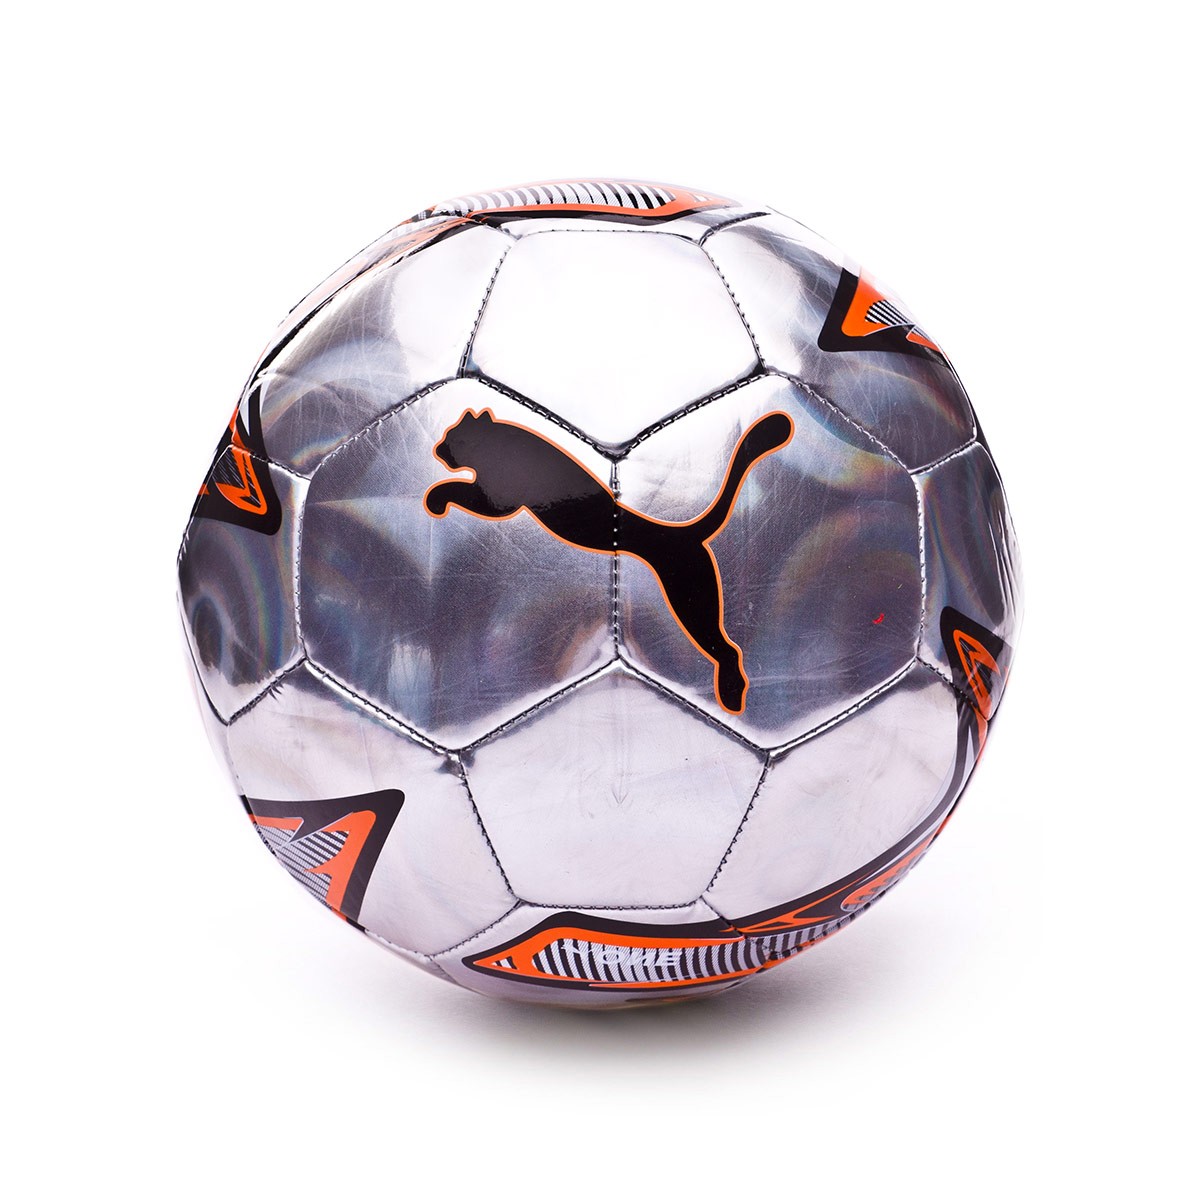 Ball Puma One Laser Silver-Shocking orange-Puma black - Football store  Fútbol Emotion